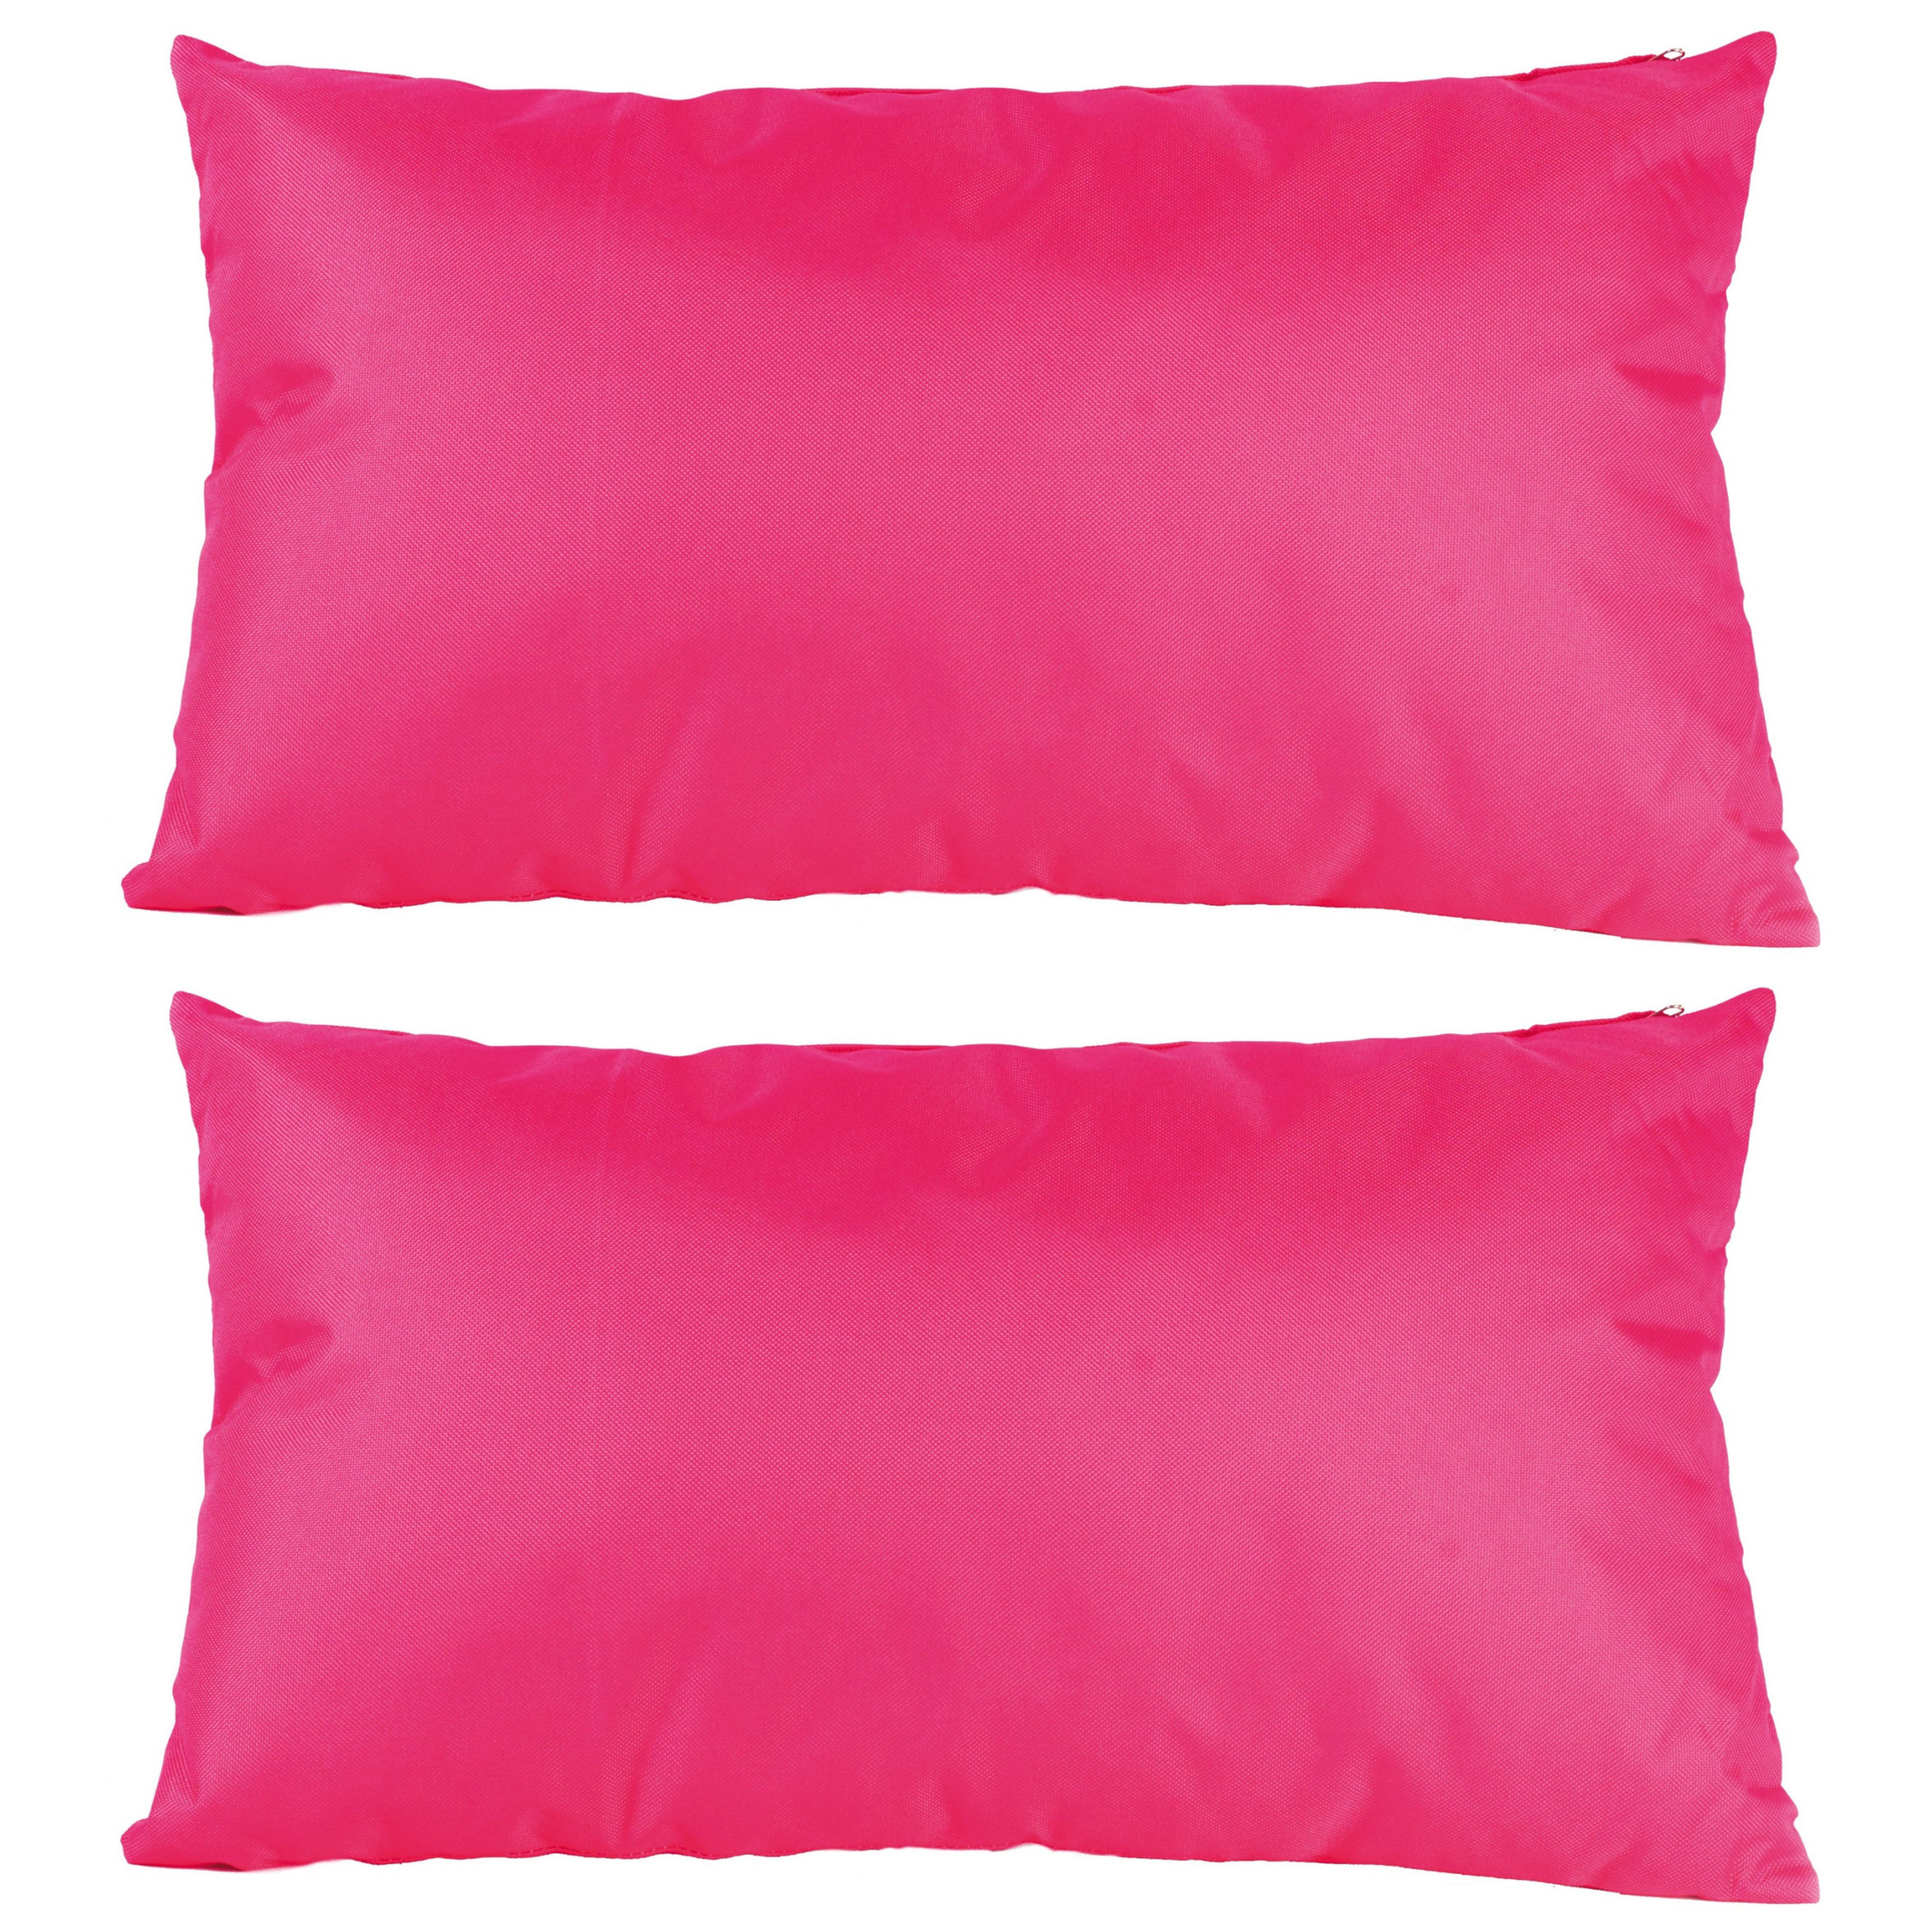 4x Bank-sier kussens voor binnen en buiten in de kleur fuchsia roze 30 x 50 cm